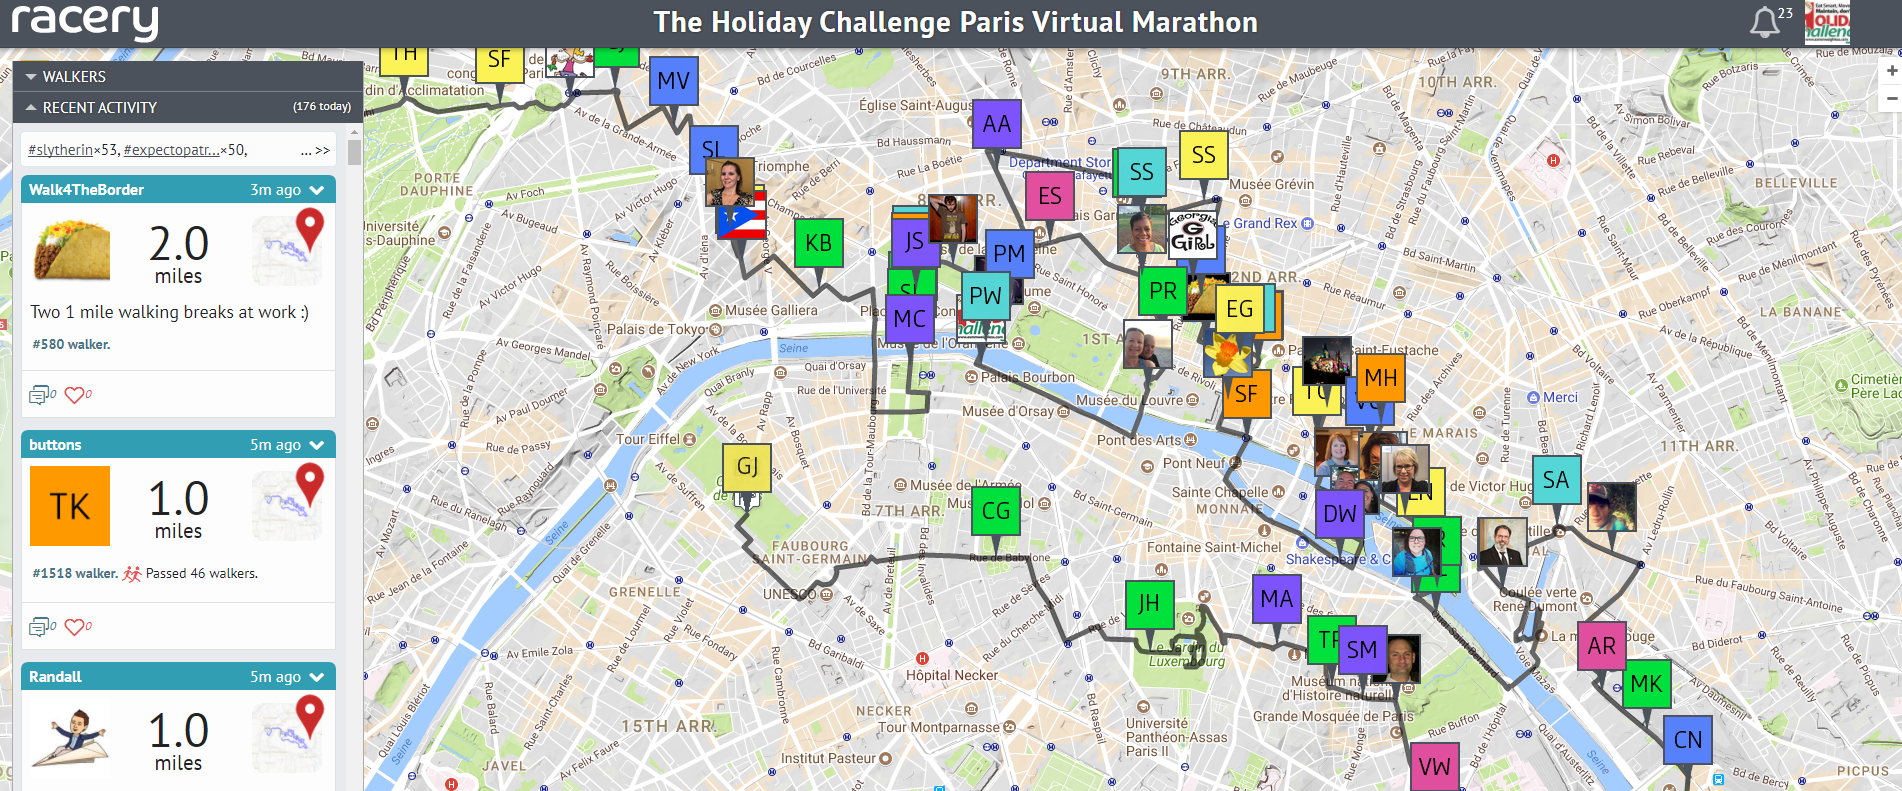 holiday challenge racery map